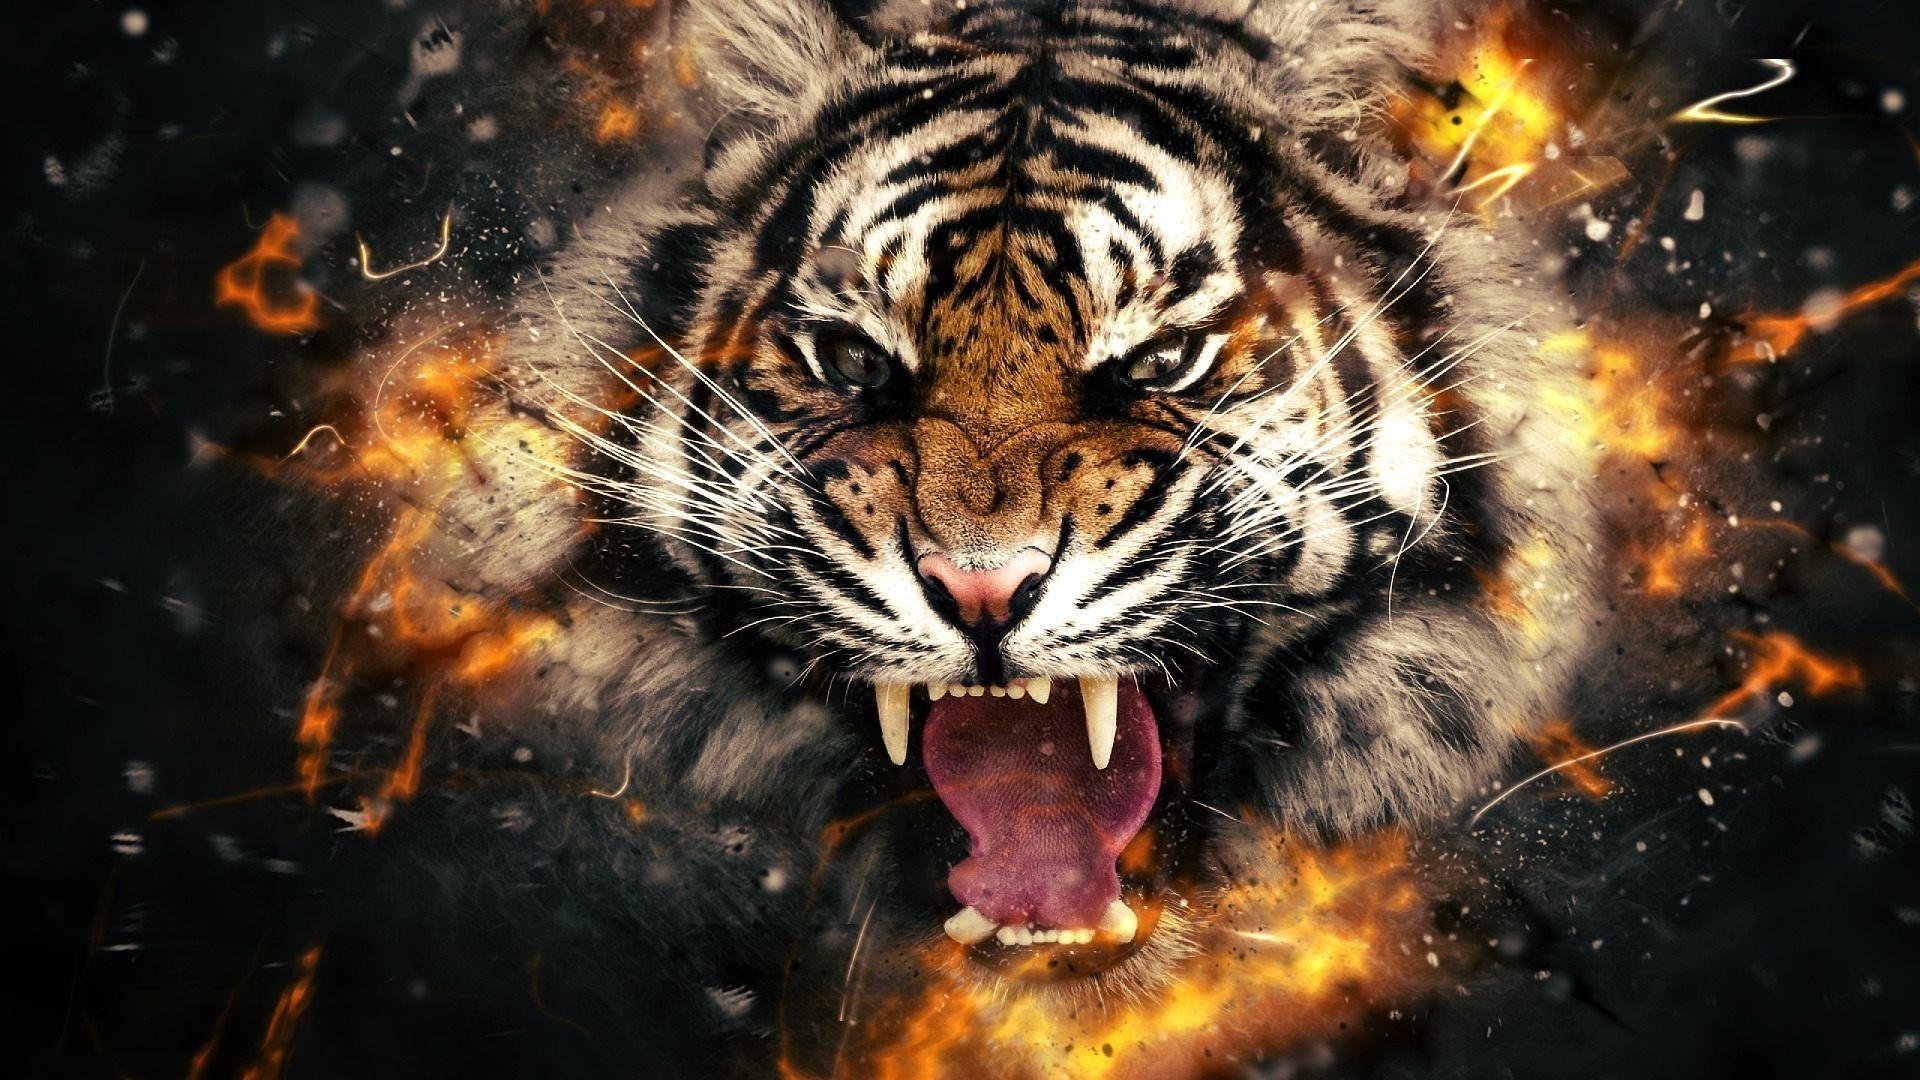 Tiger Wallpaper 3D Picture Free Download > SubWallpaper